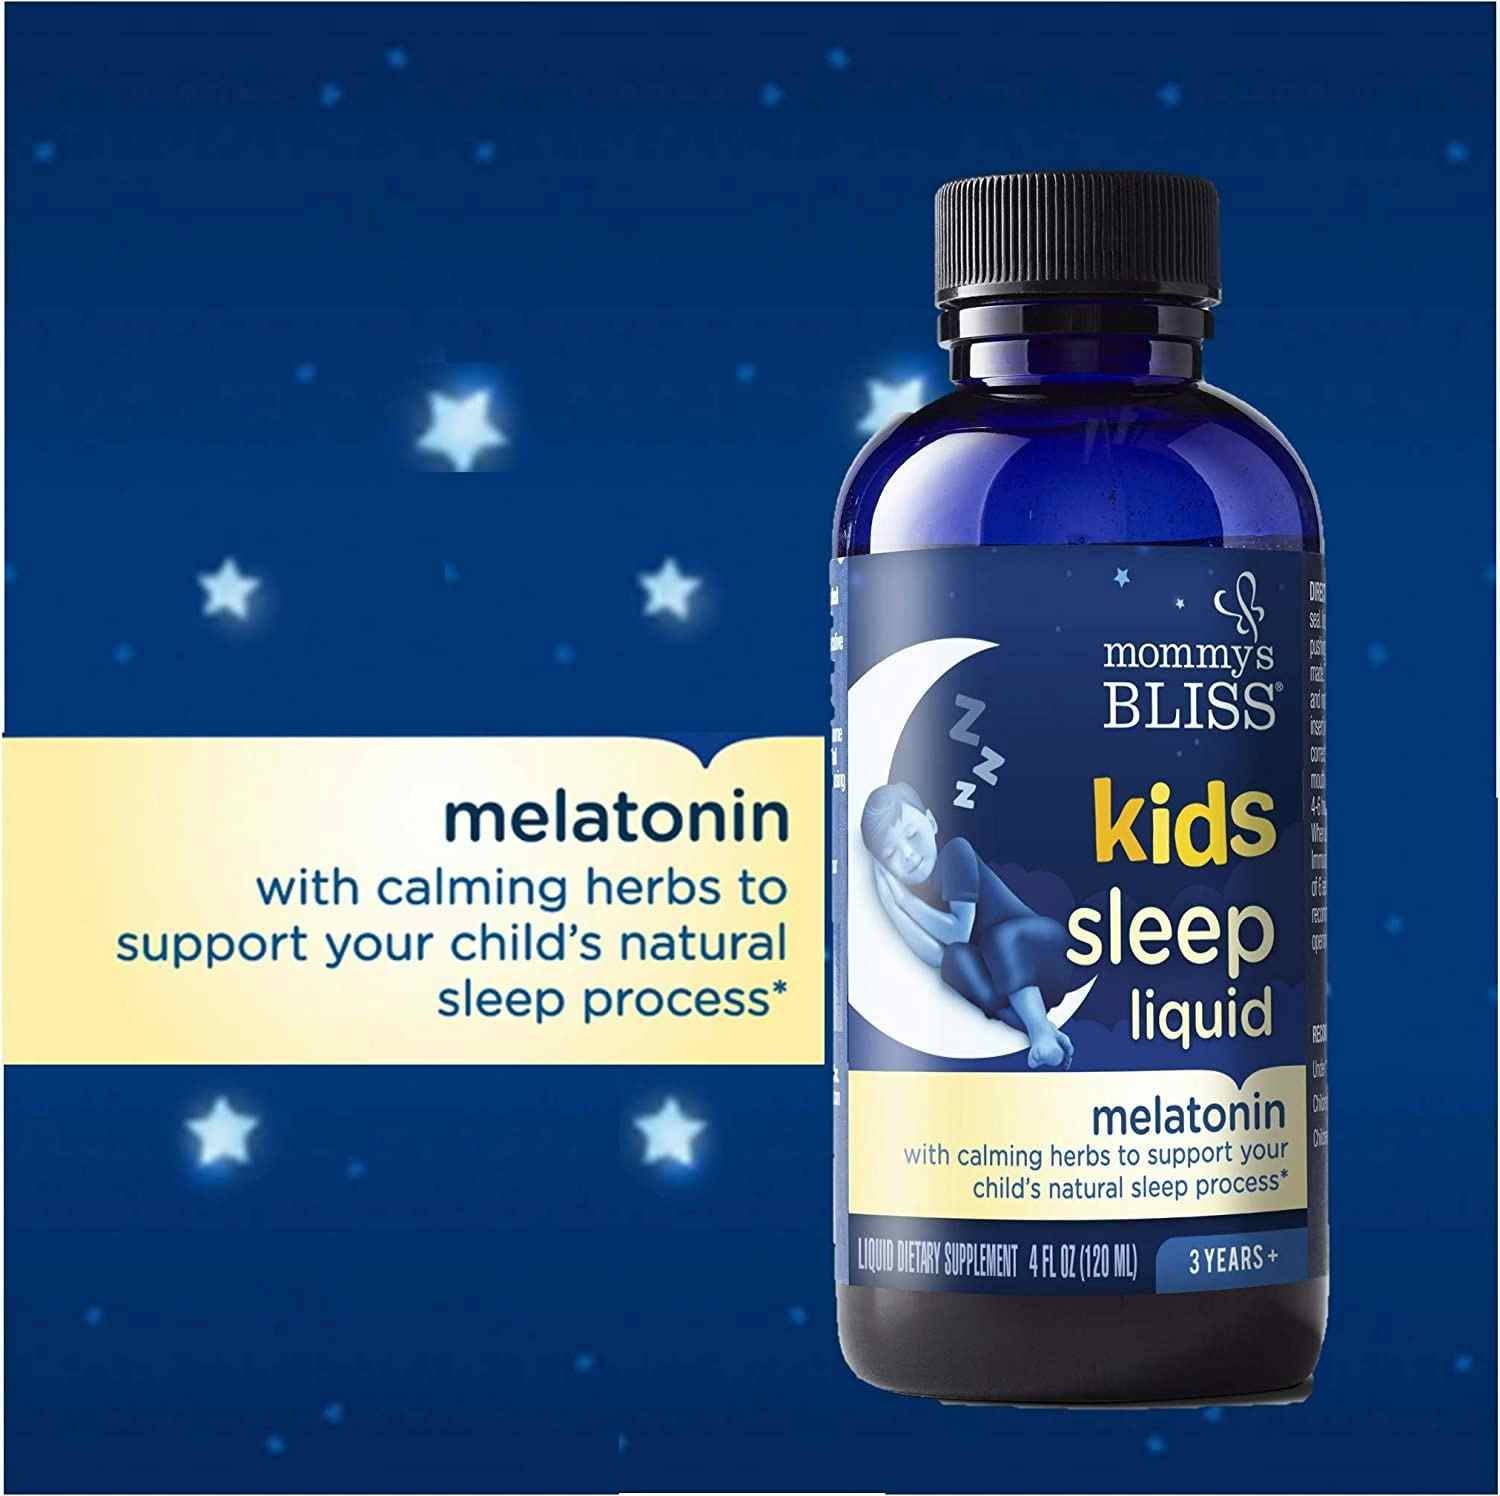 Mommy's Bliss Kids Sleep Liquid with Melatonin